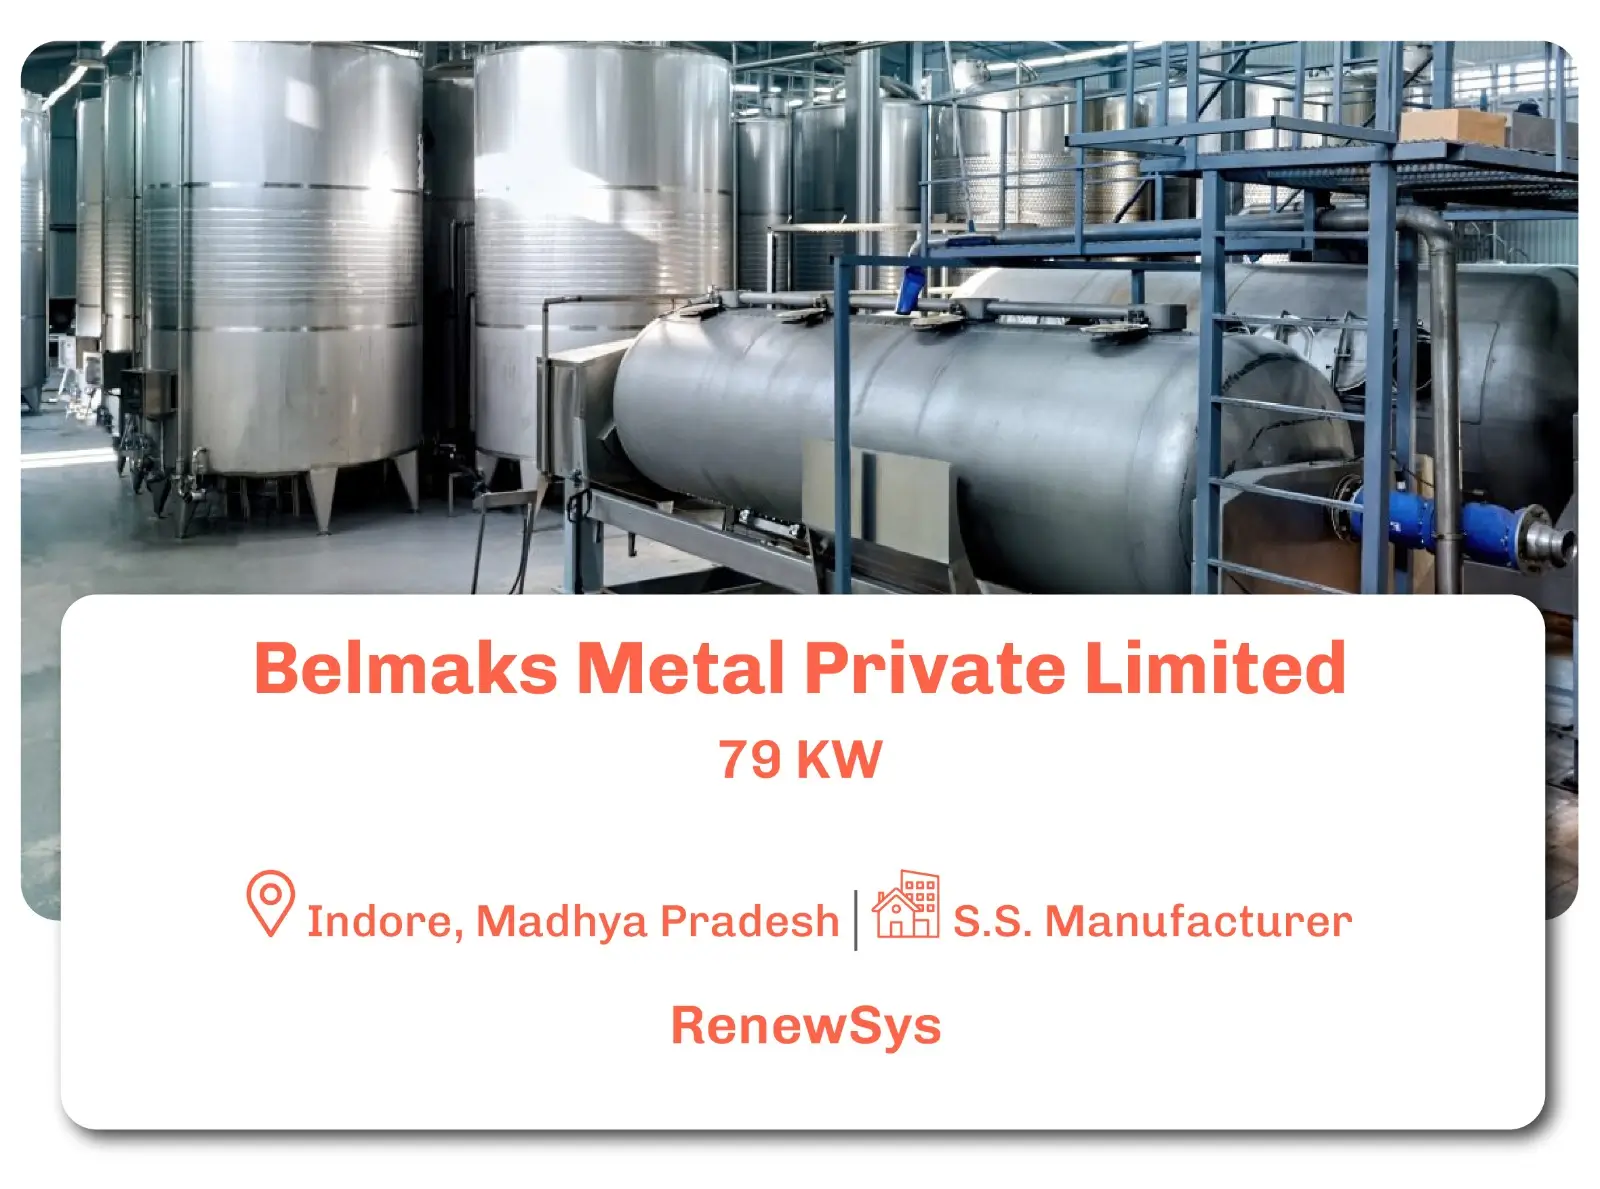 Belmaks Metal Private Limited